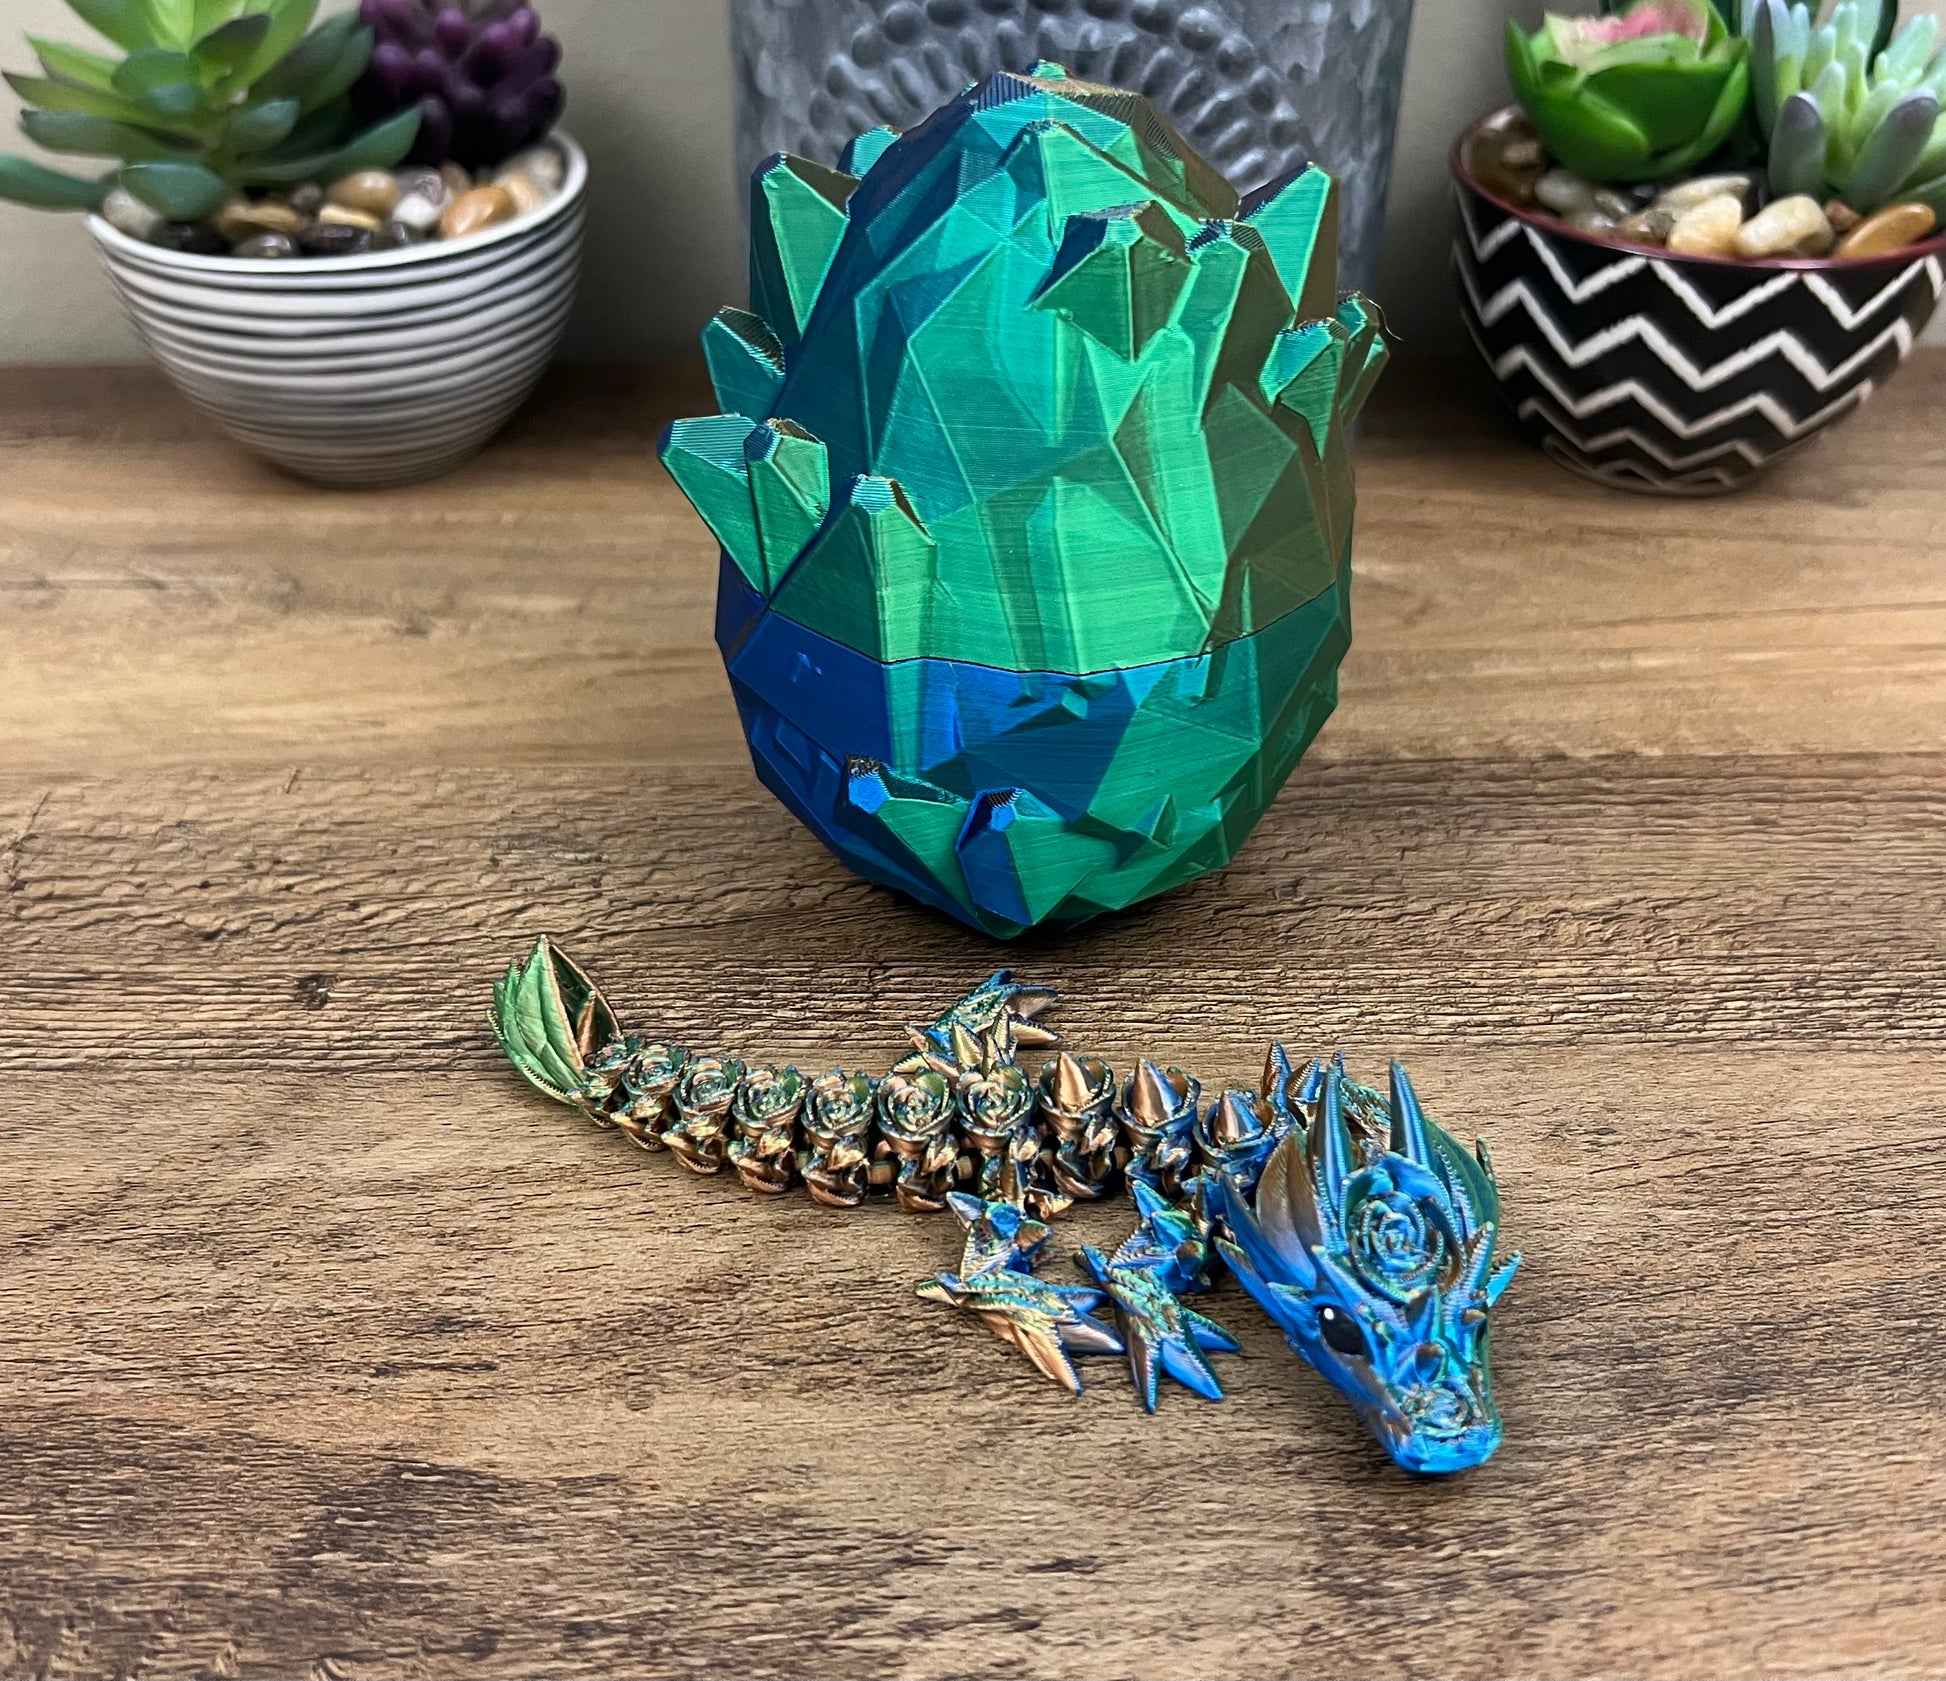 Baby Dragon with Crystal Egg.